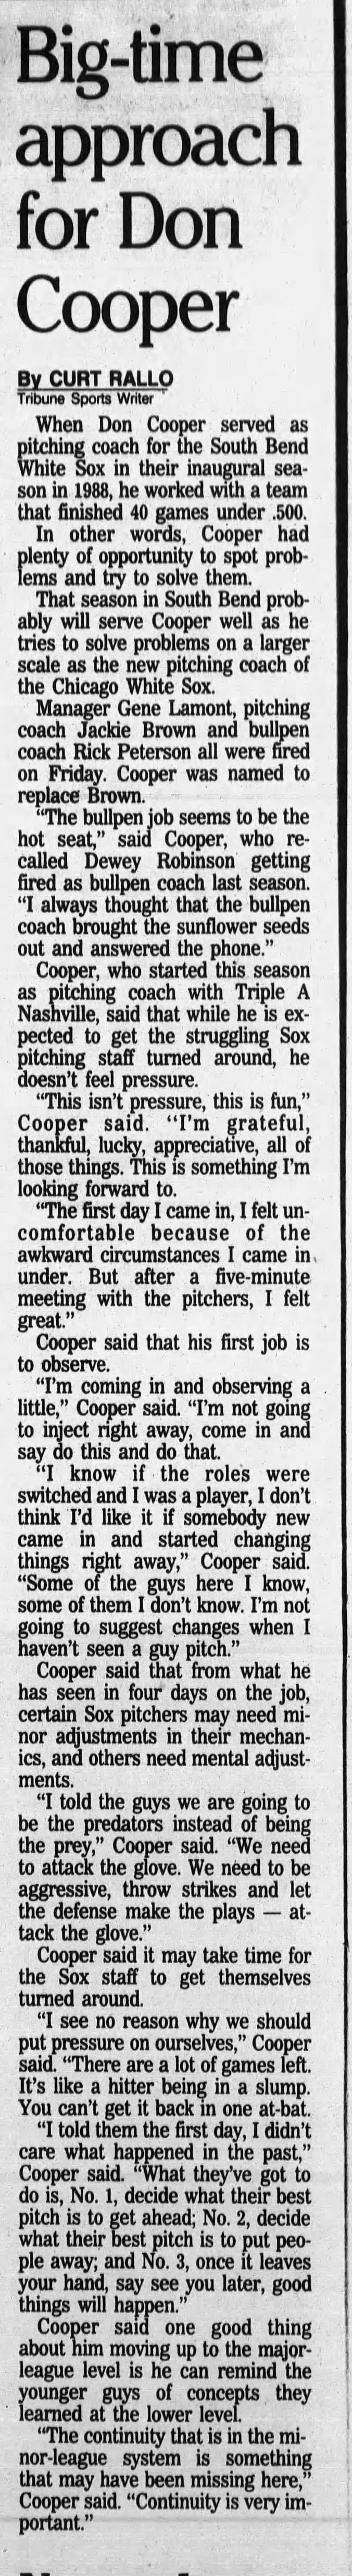 Don Cooper - June 6, 1995 - Greatest21Days.com